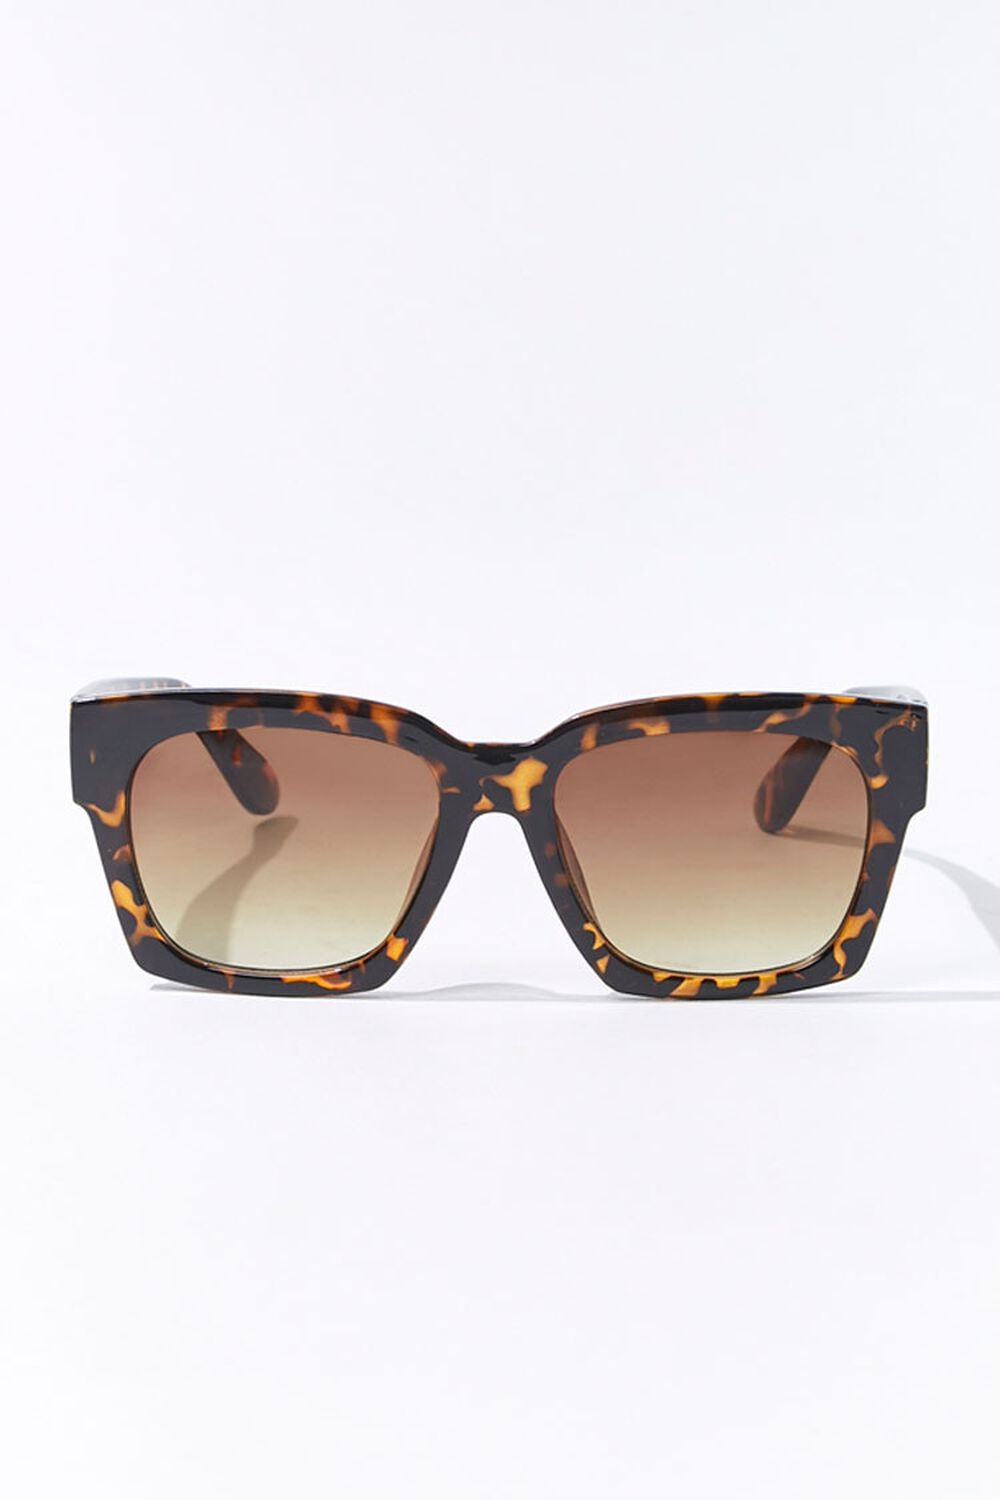 Square Tortoiseshell Sunglasses, image 1